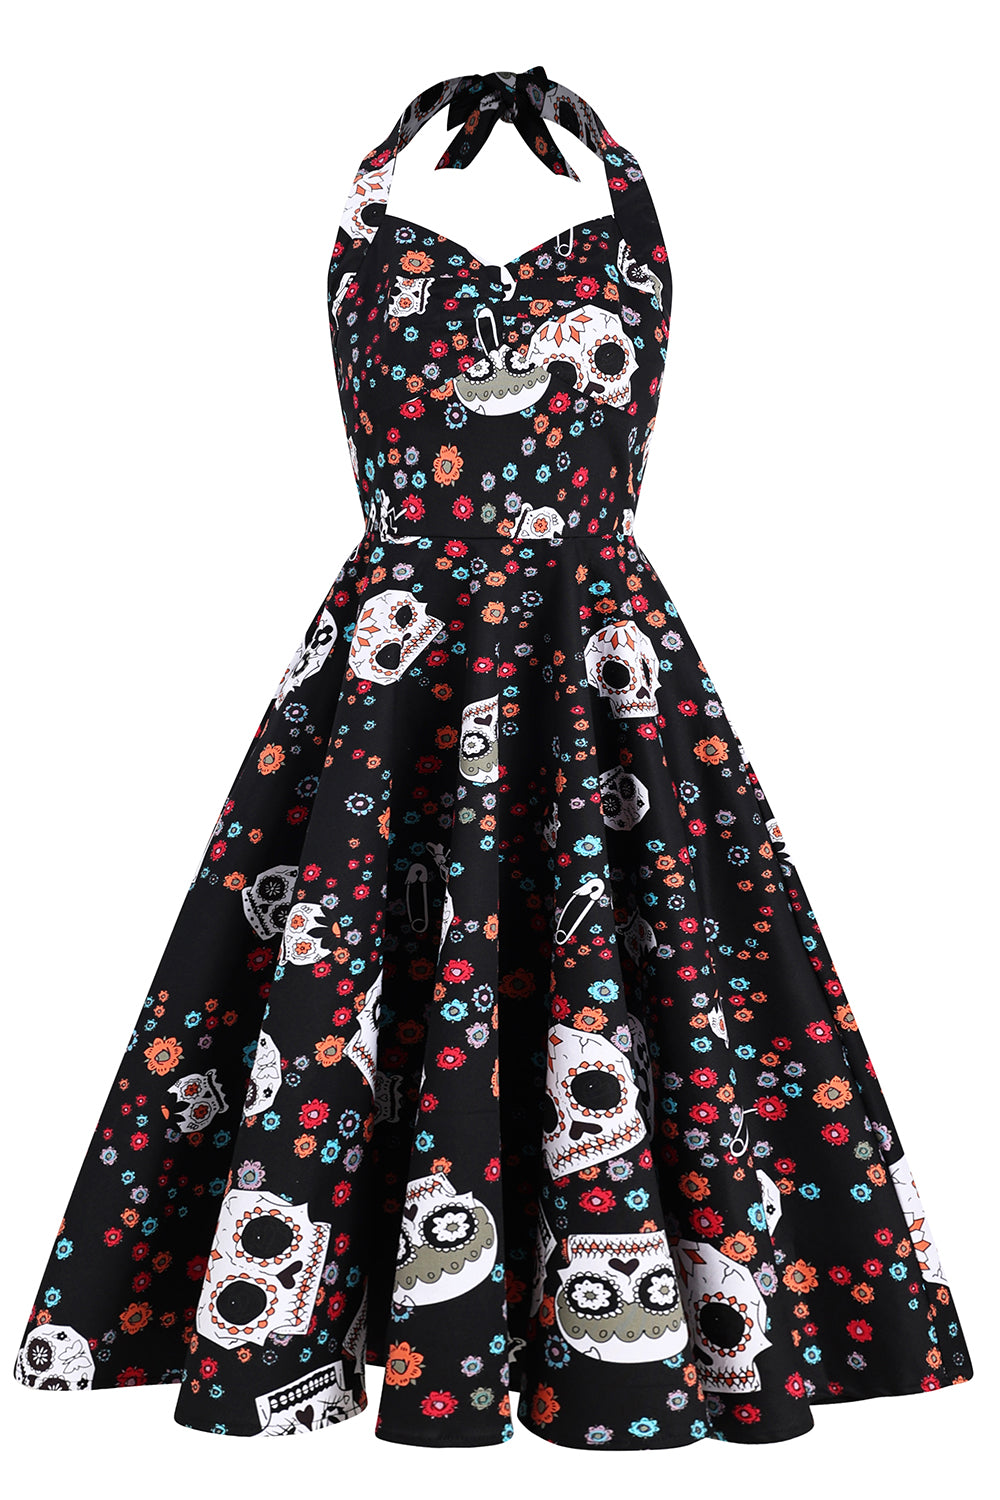 Black Skull Halloween Dress